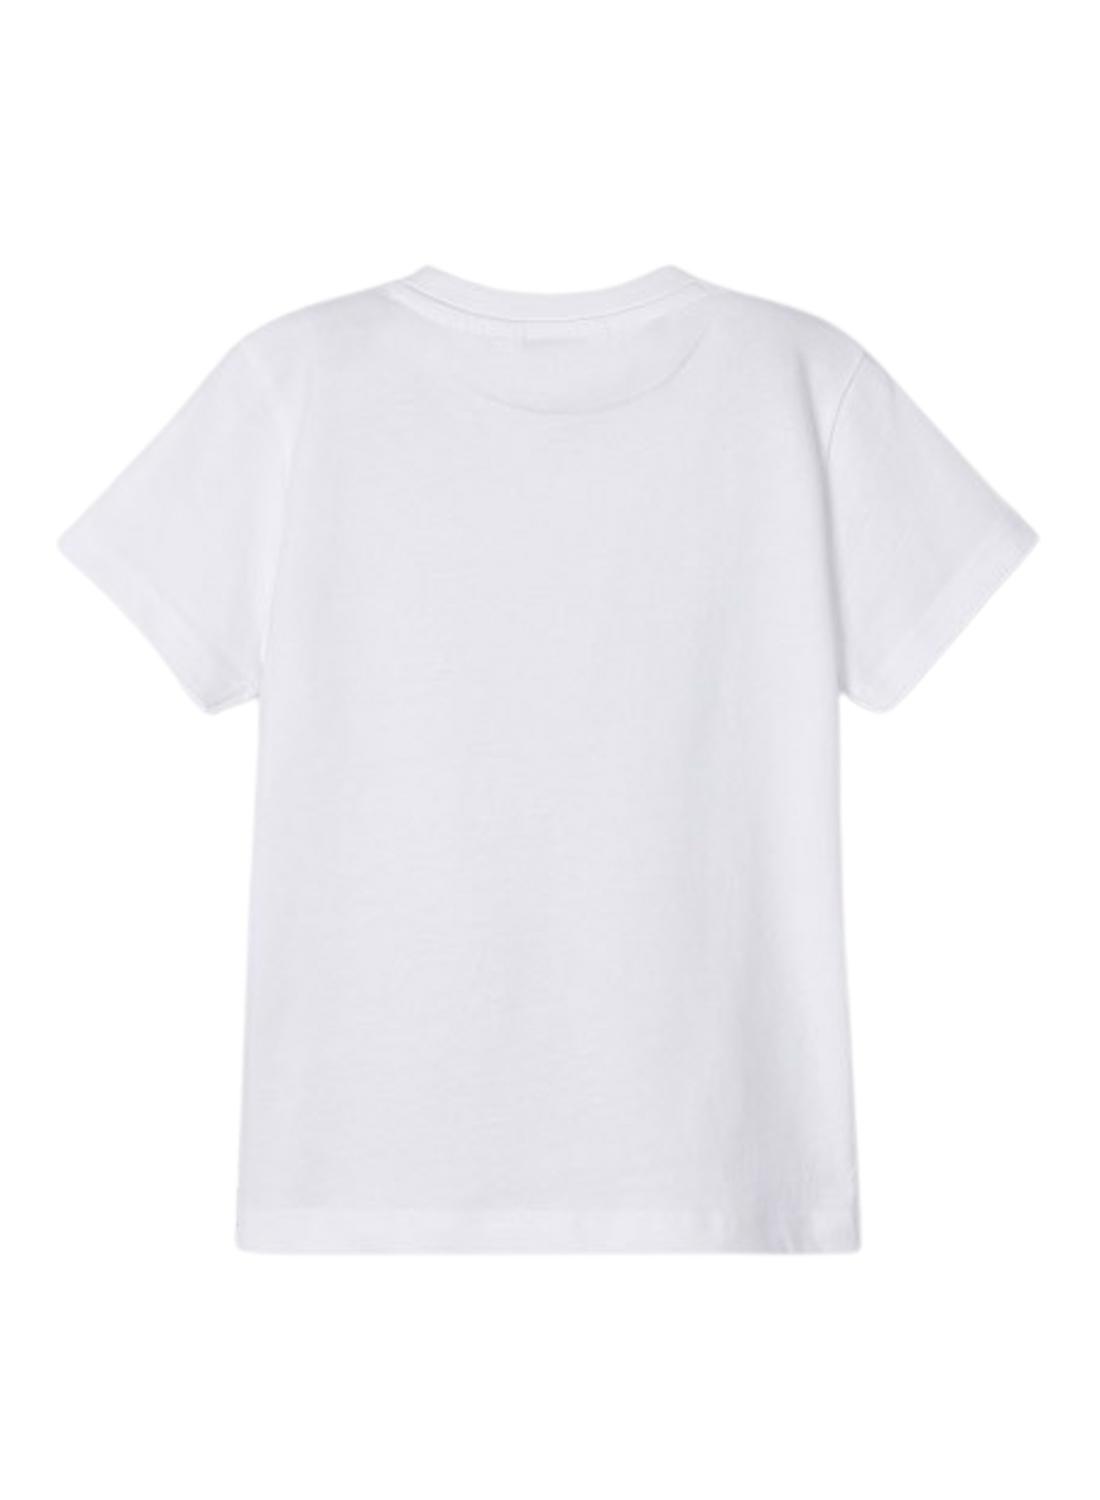 T-Shirt Mayoral Selvaggio Bianco per Bambino